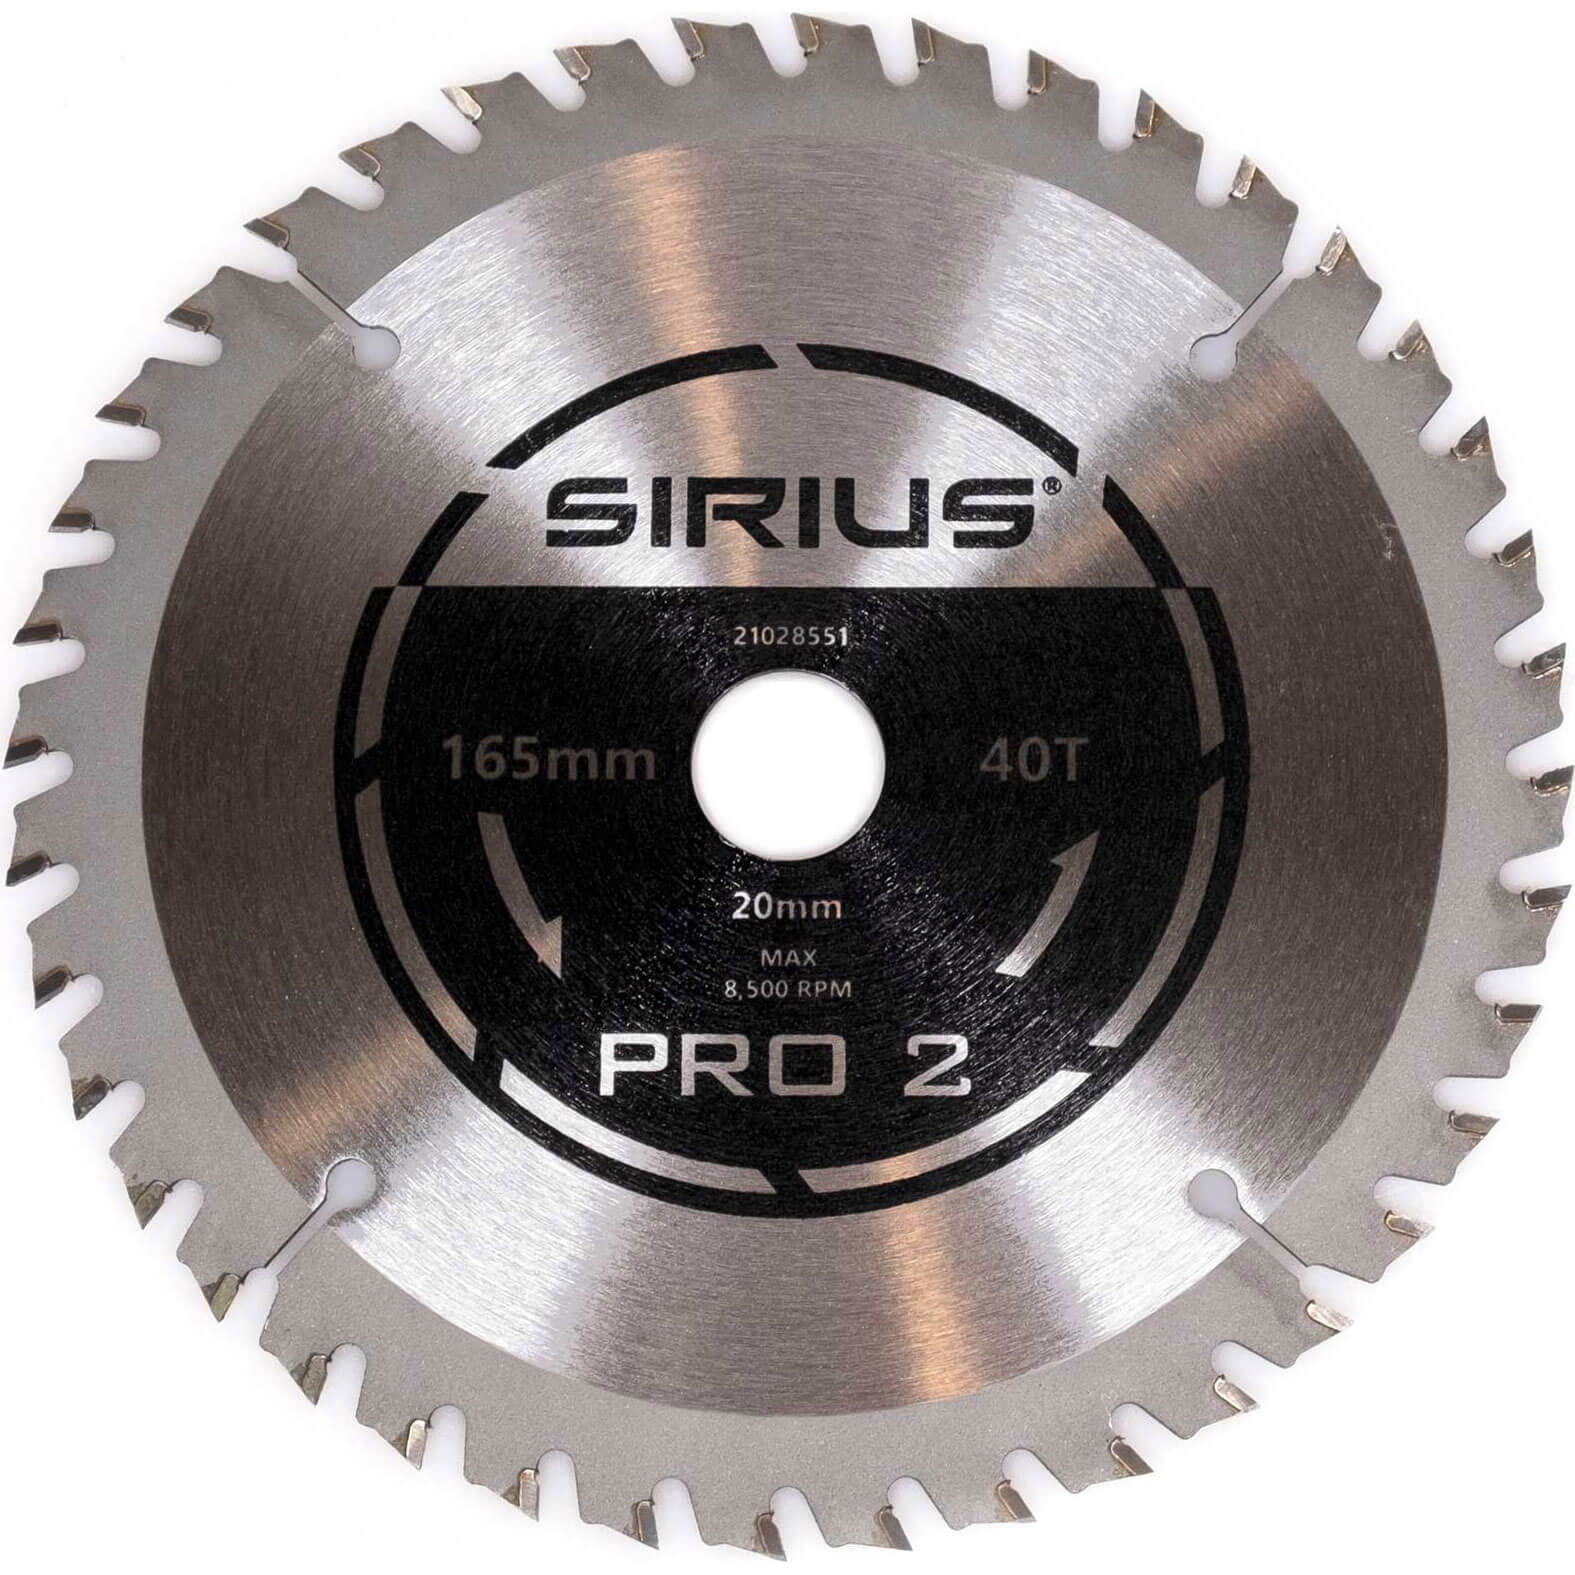 Image of Sirius PRO 2 165mm Cordless Circular Saw Blade 165mm 40T 20mm